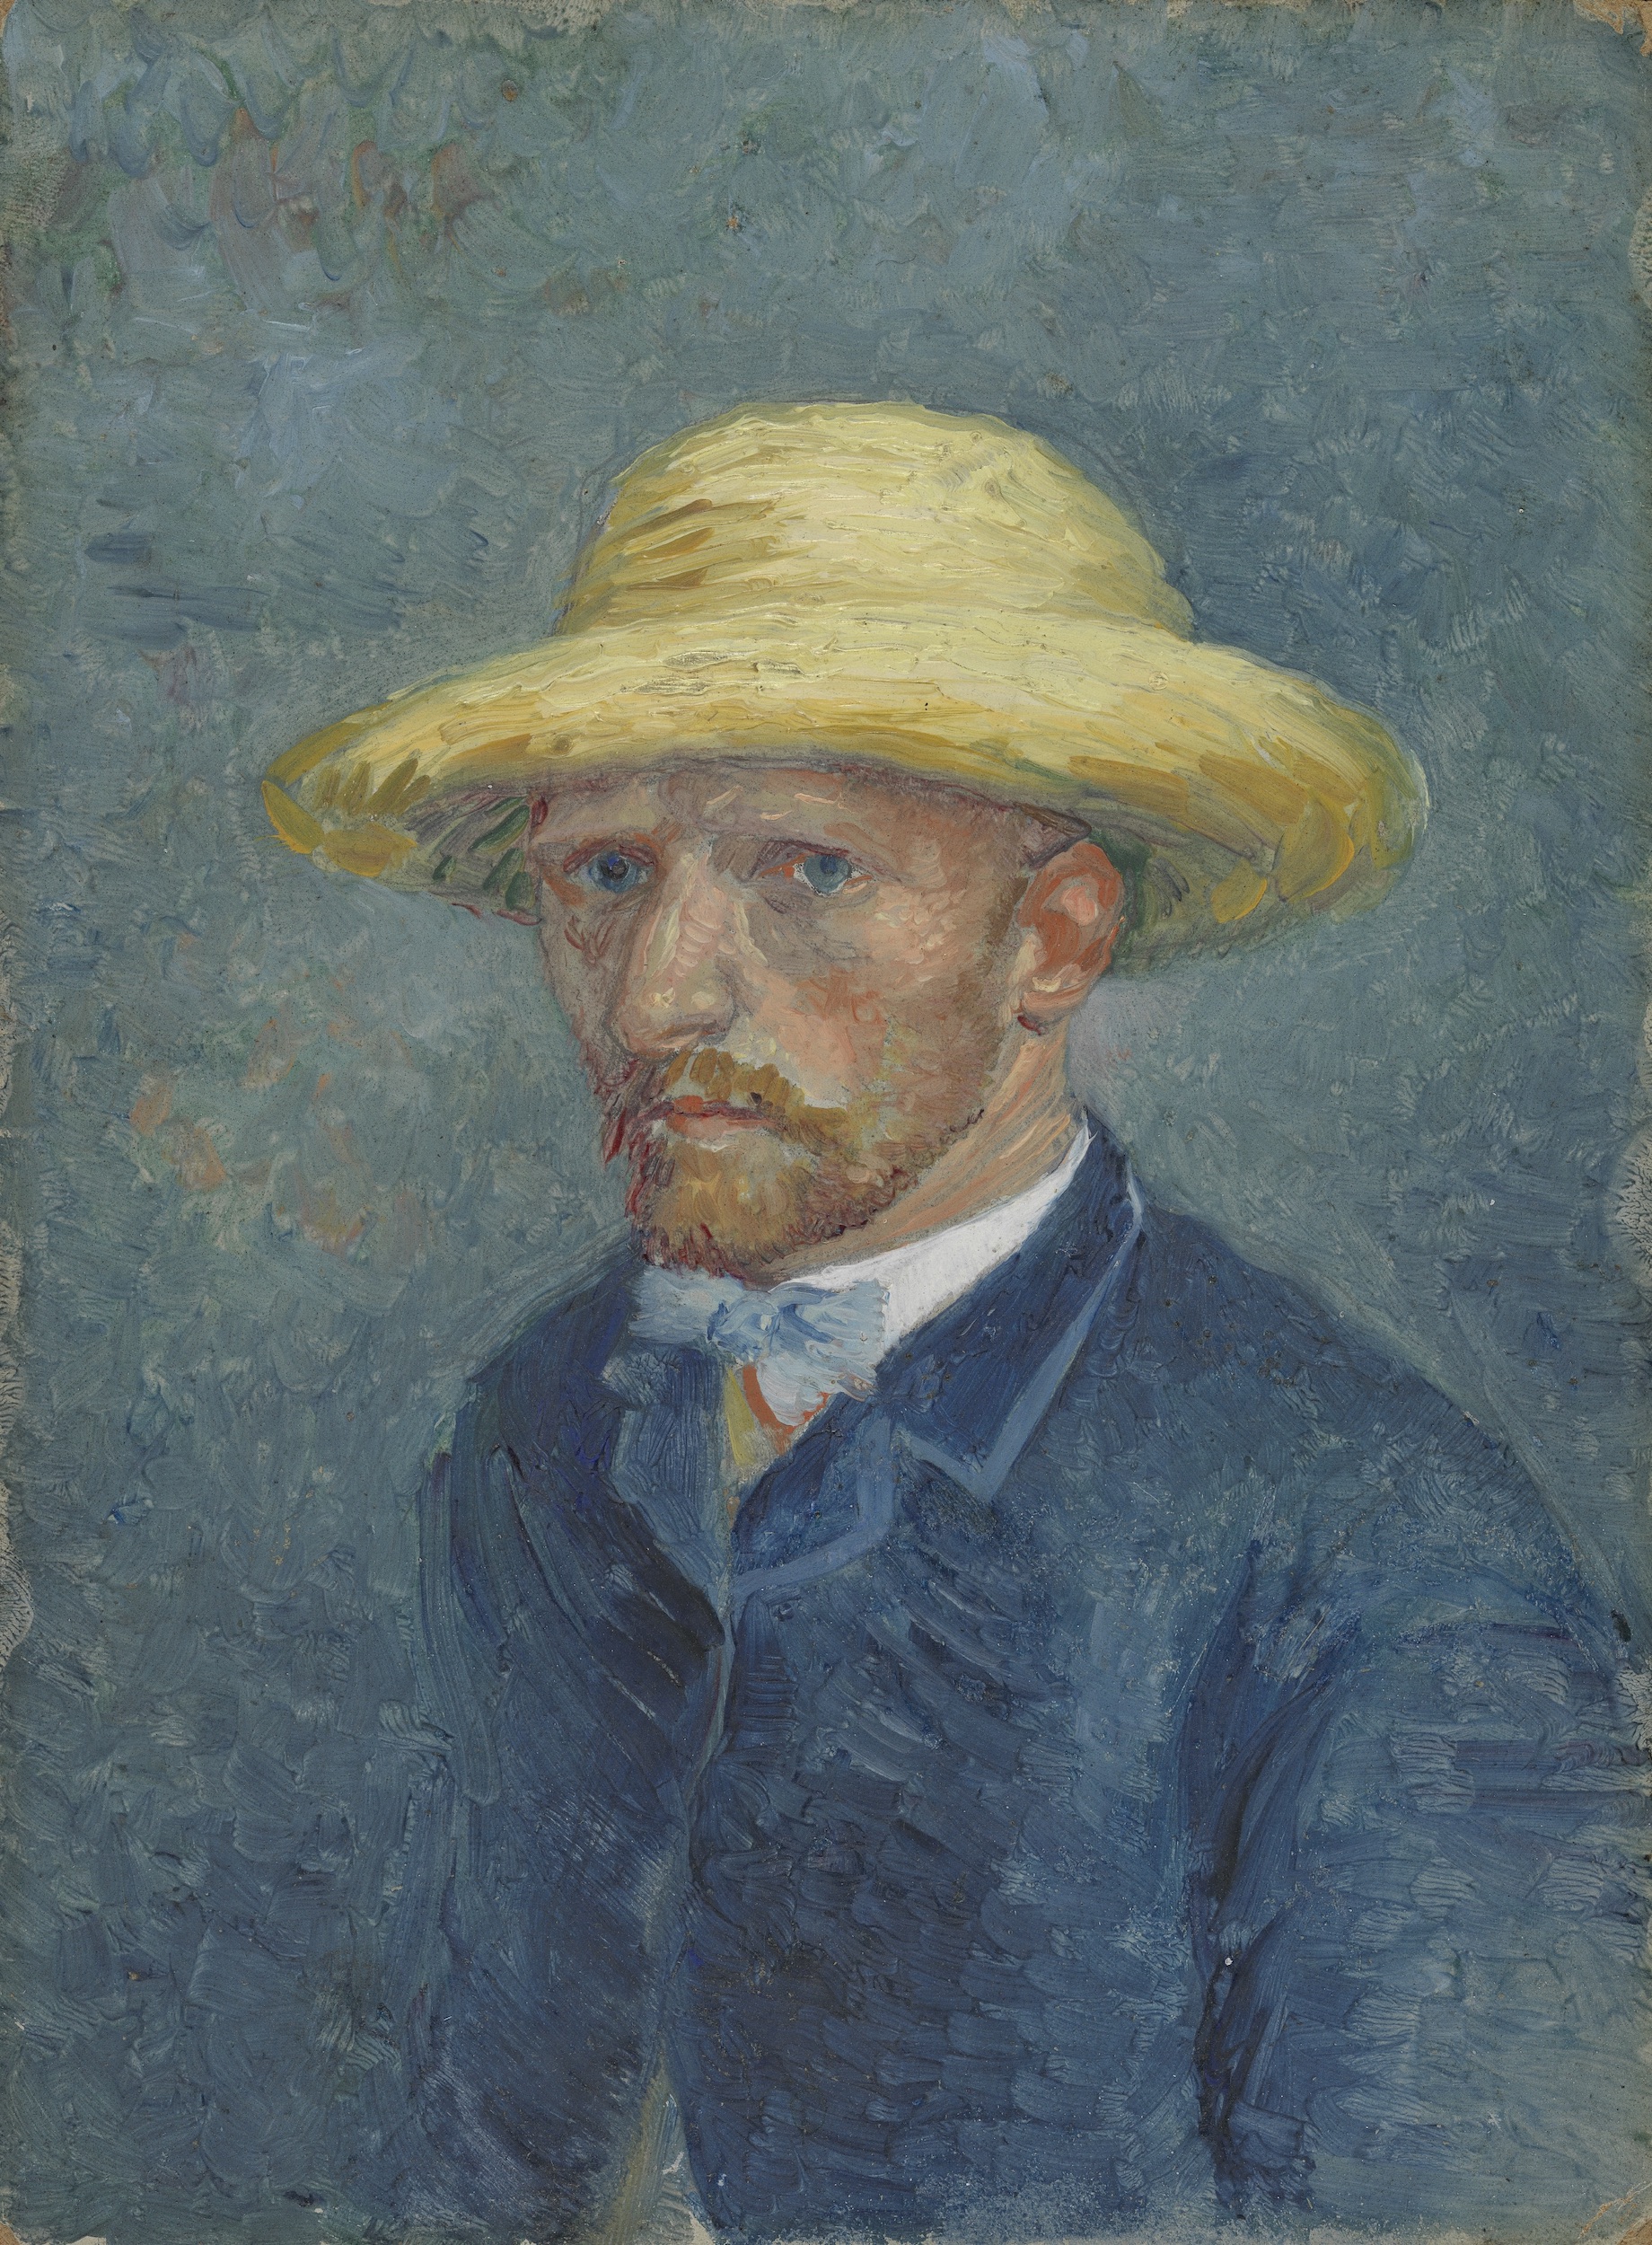 Autoportret lub Portret Theo van Gogha by Vincent van Gogh - lato 1887 roku - 19 cm x 14,1 cm 